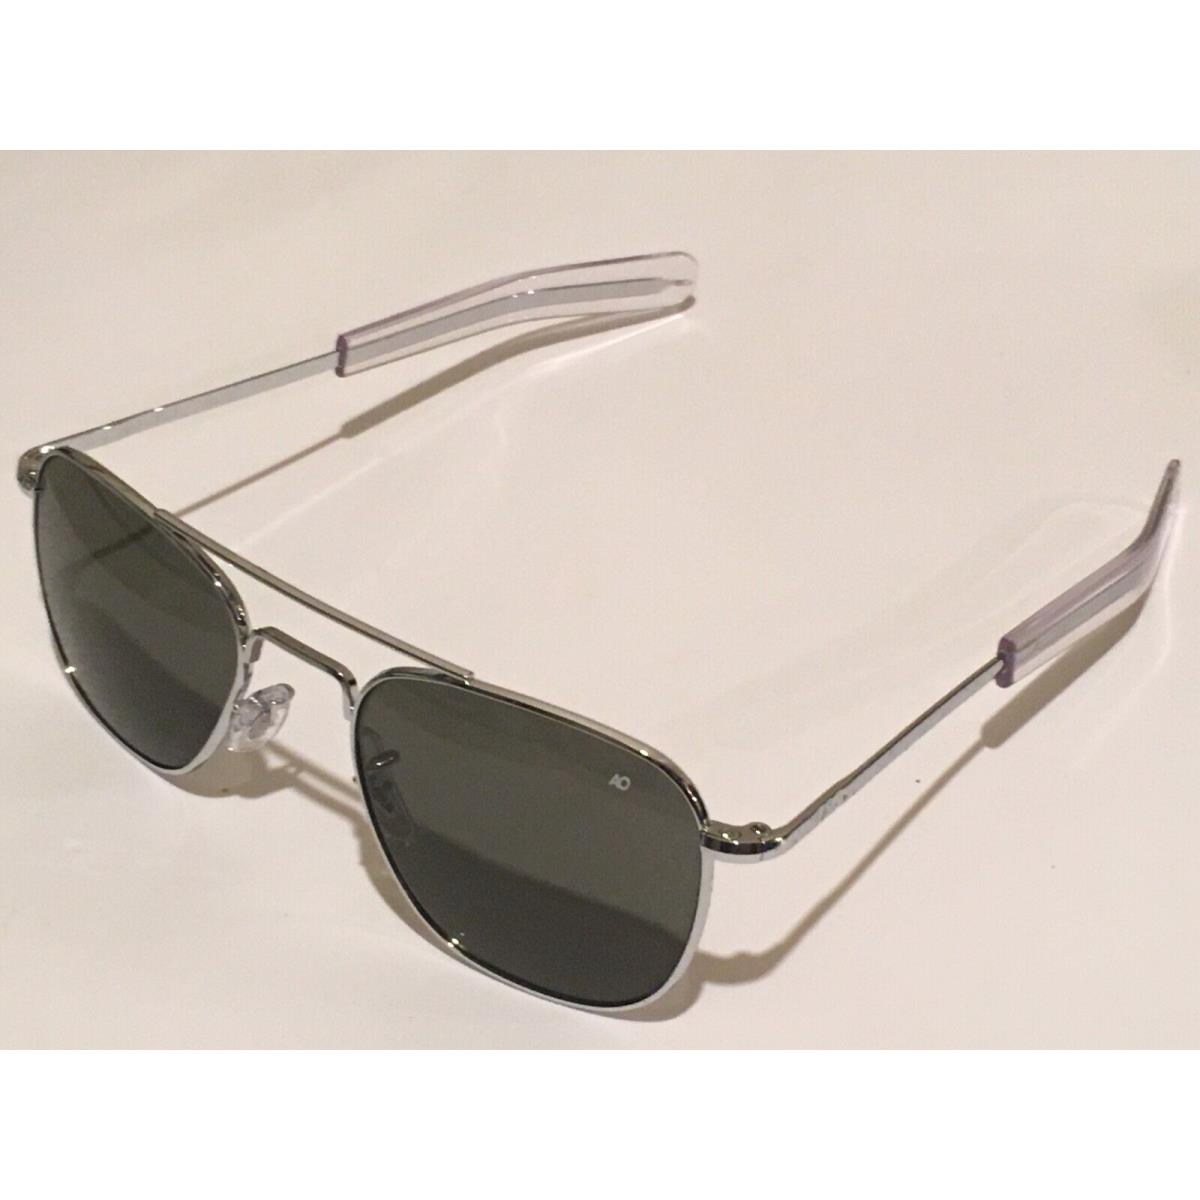 52mm Silver Frames American Optical AO Pilot Sunglasses